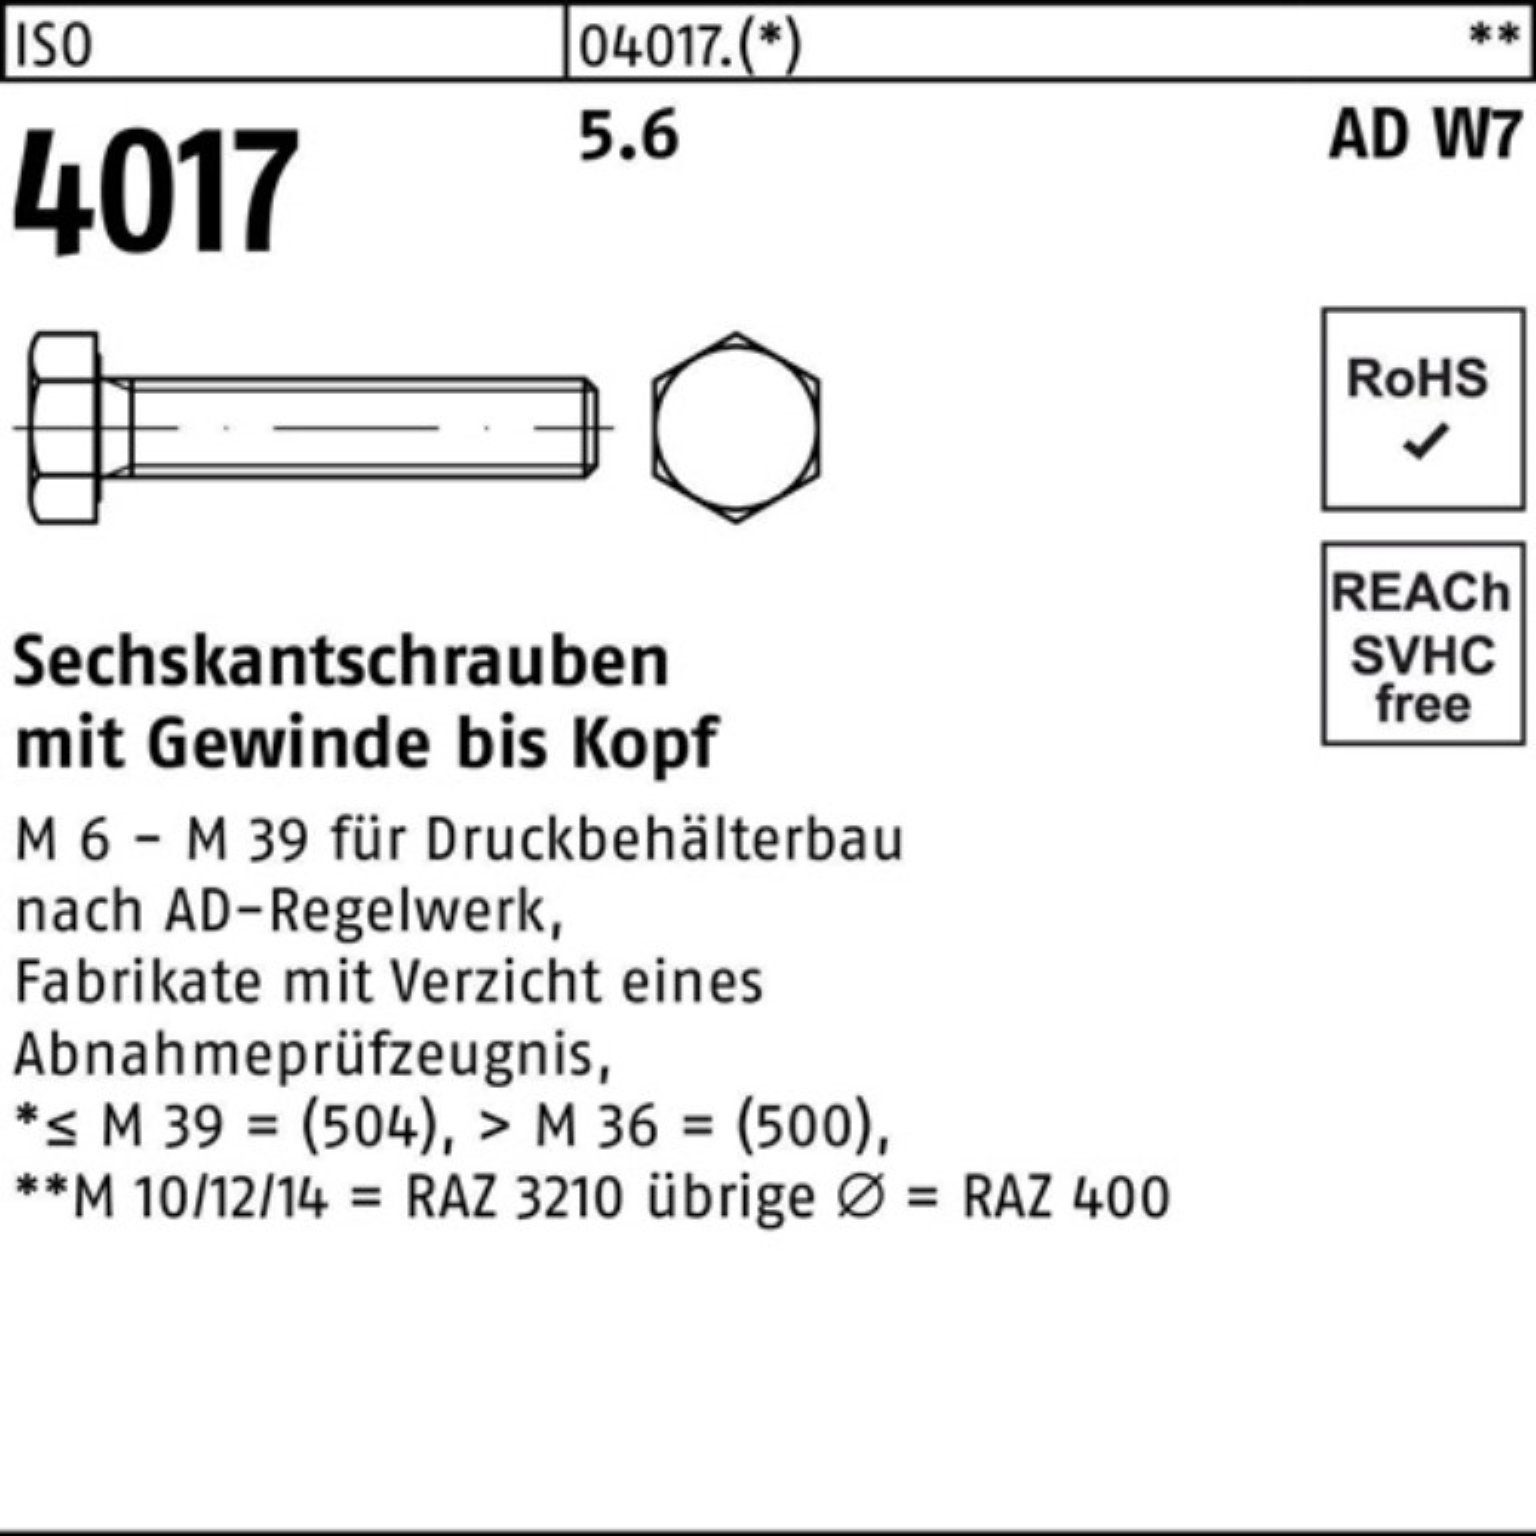 Sechskantschraube VG W7 M24x Sechskantschraube Bufab 70 25 100er Pack 5.6 Stück I ISO AD 4017